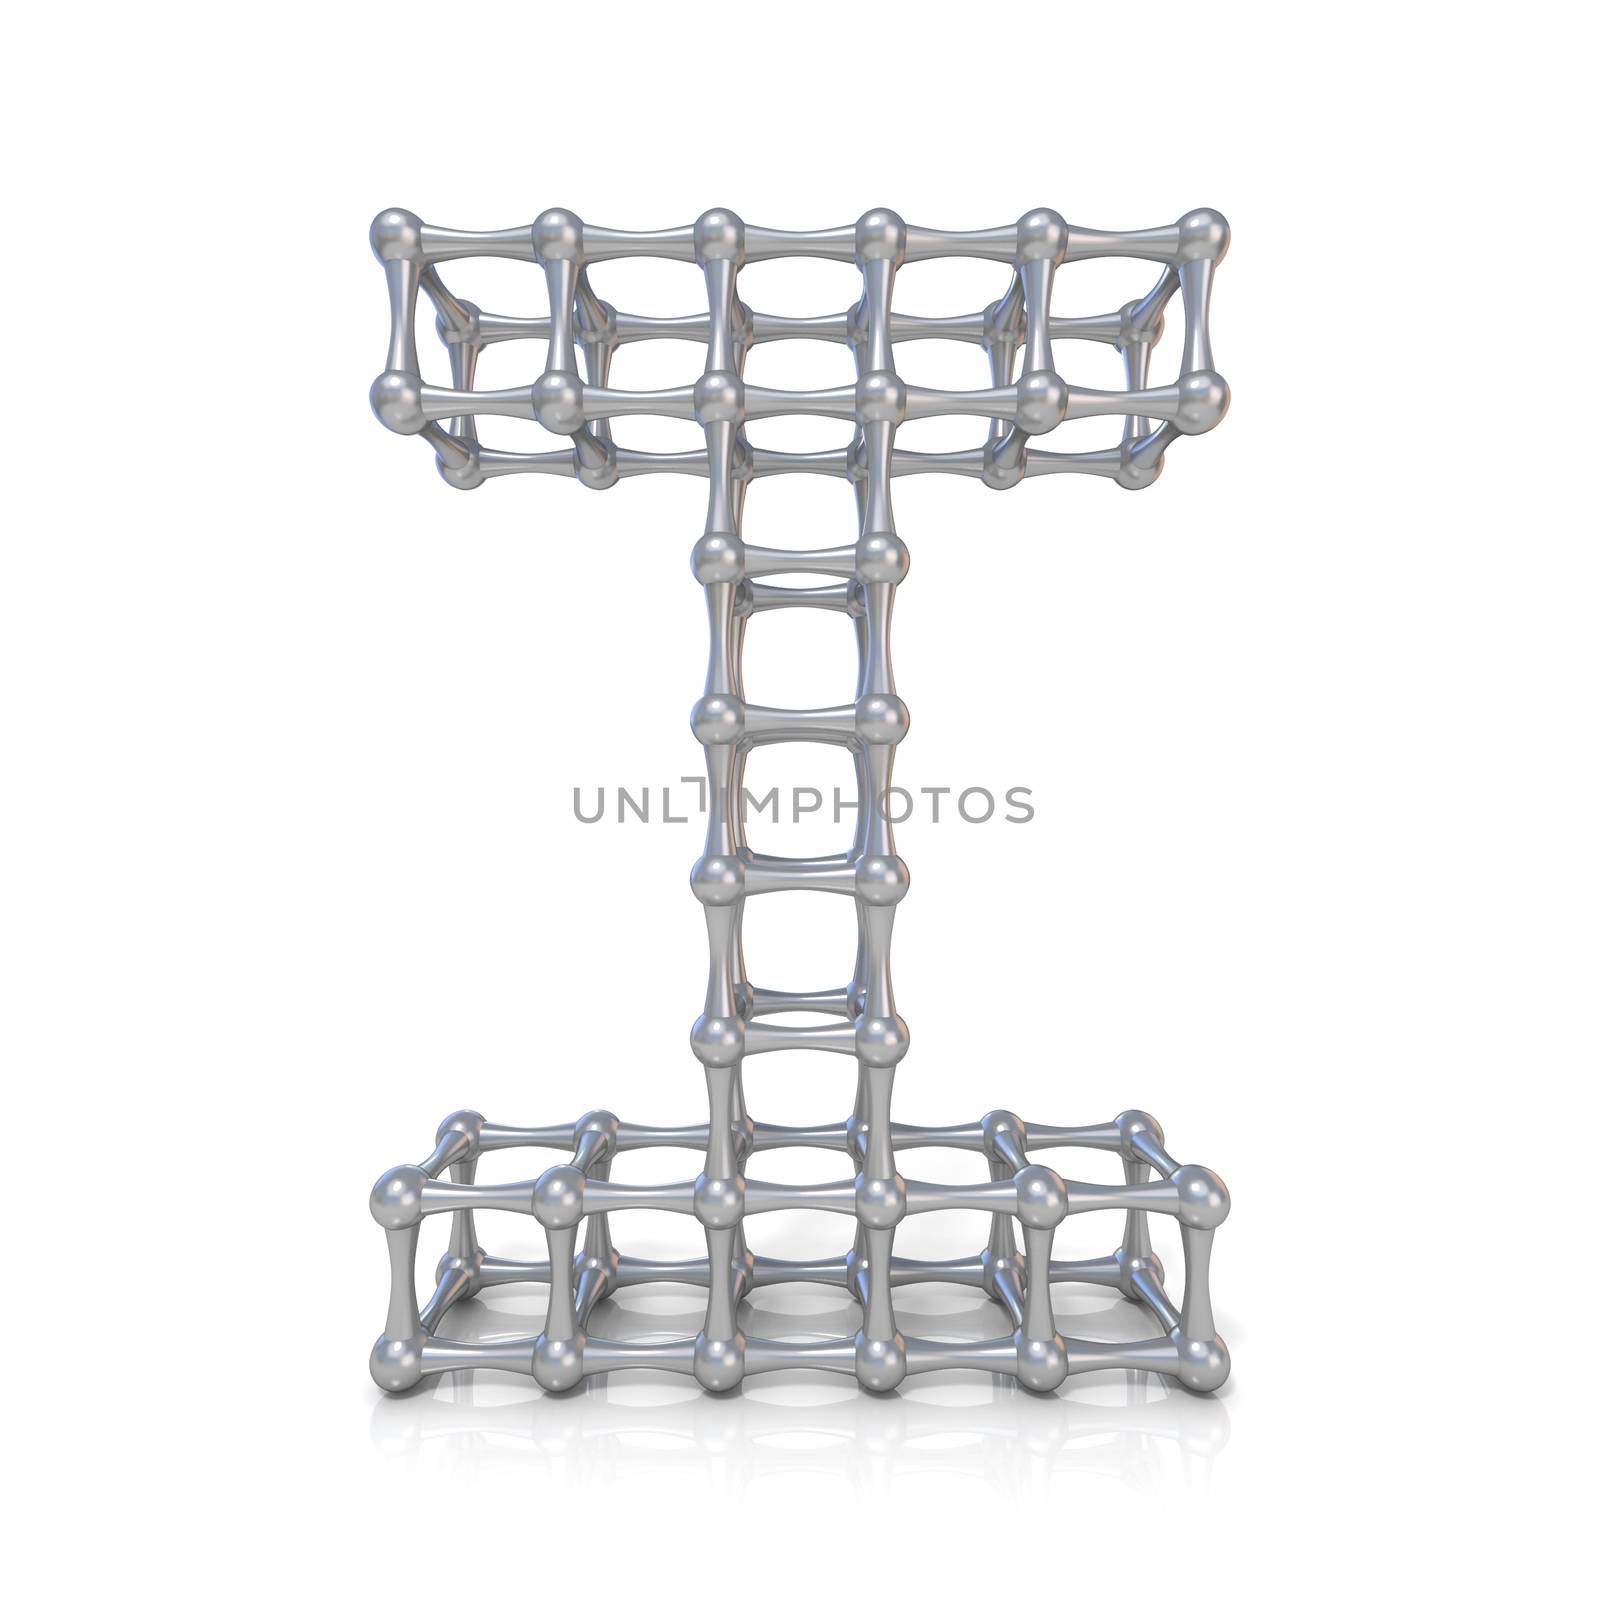 Metal lattice font letter I 3D render illustration isolated on white background